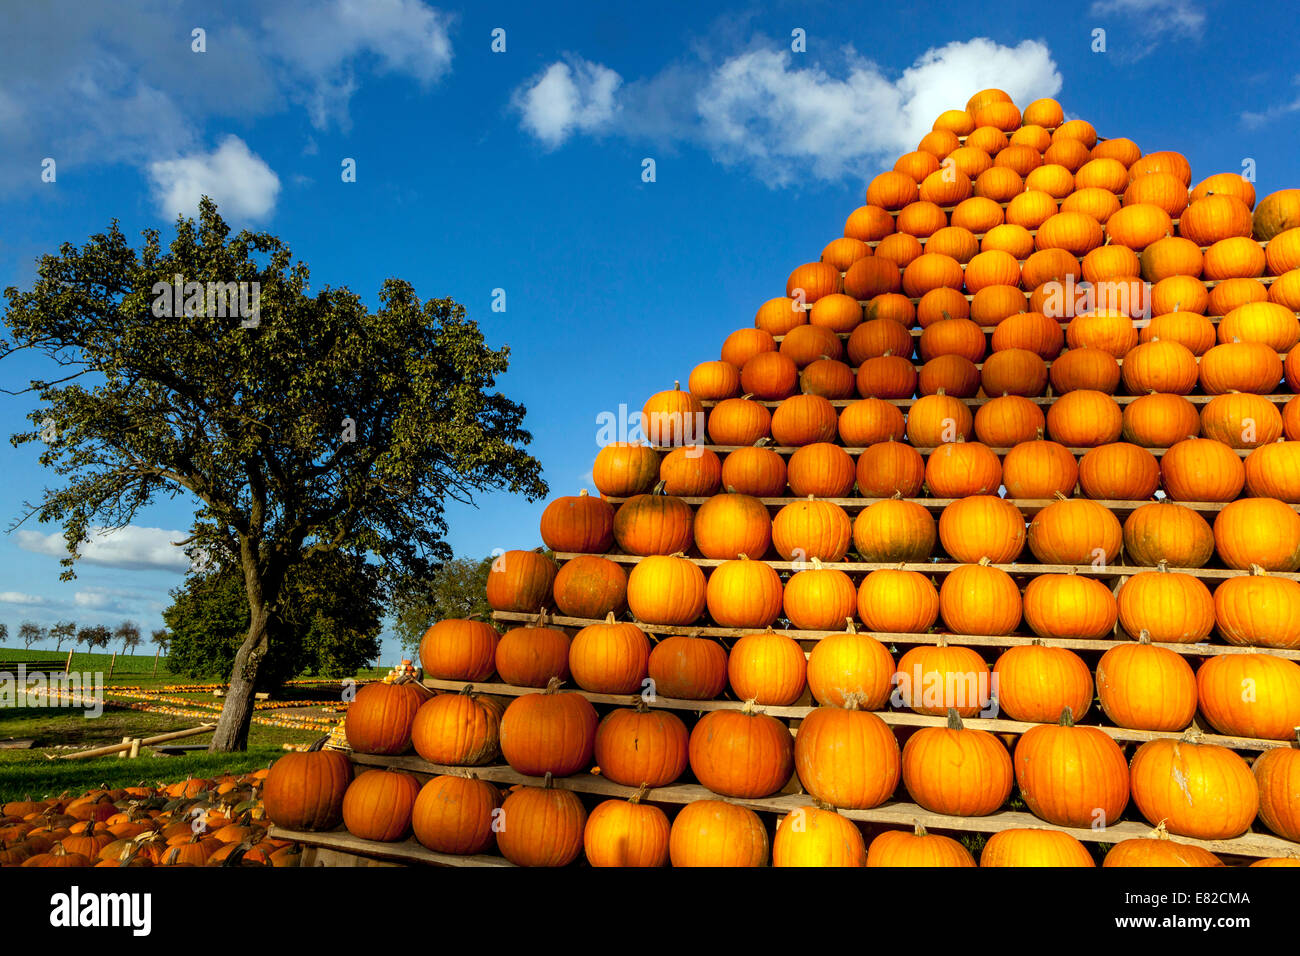 Pumpkin farm pyramid, pumpkins stacked up orange shape to sky Stock Photo